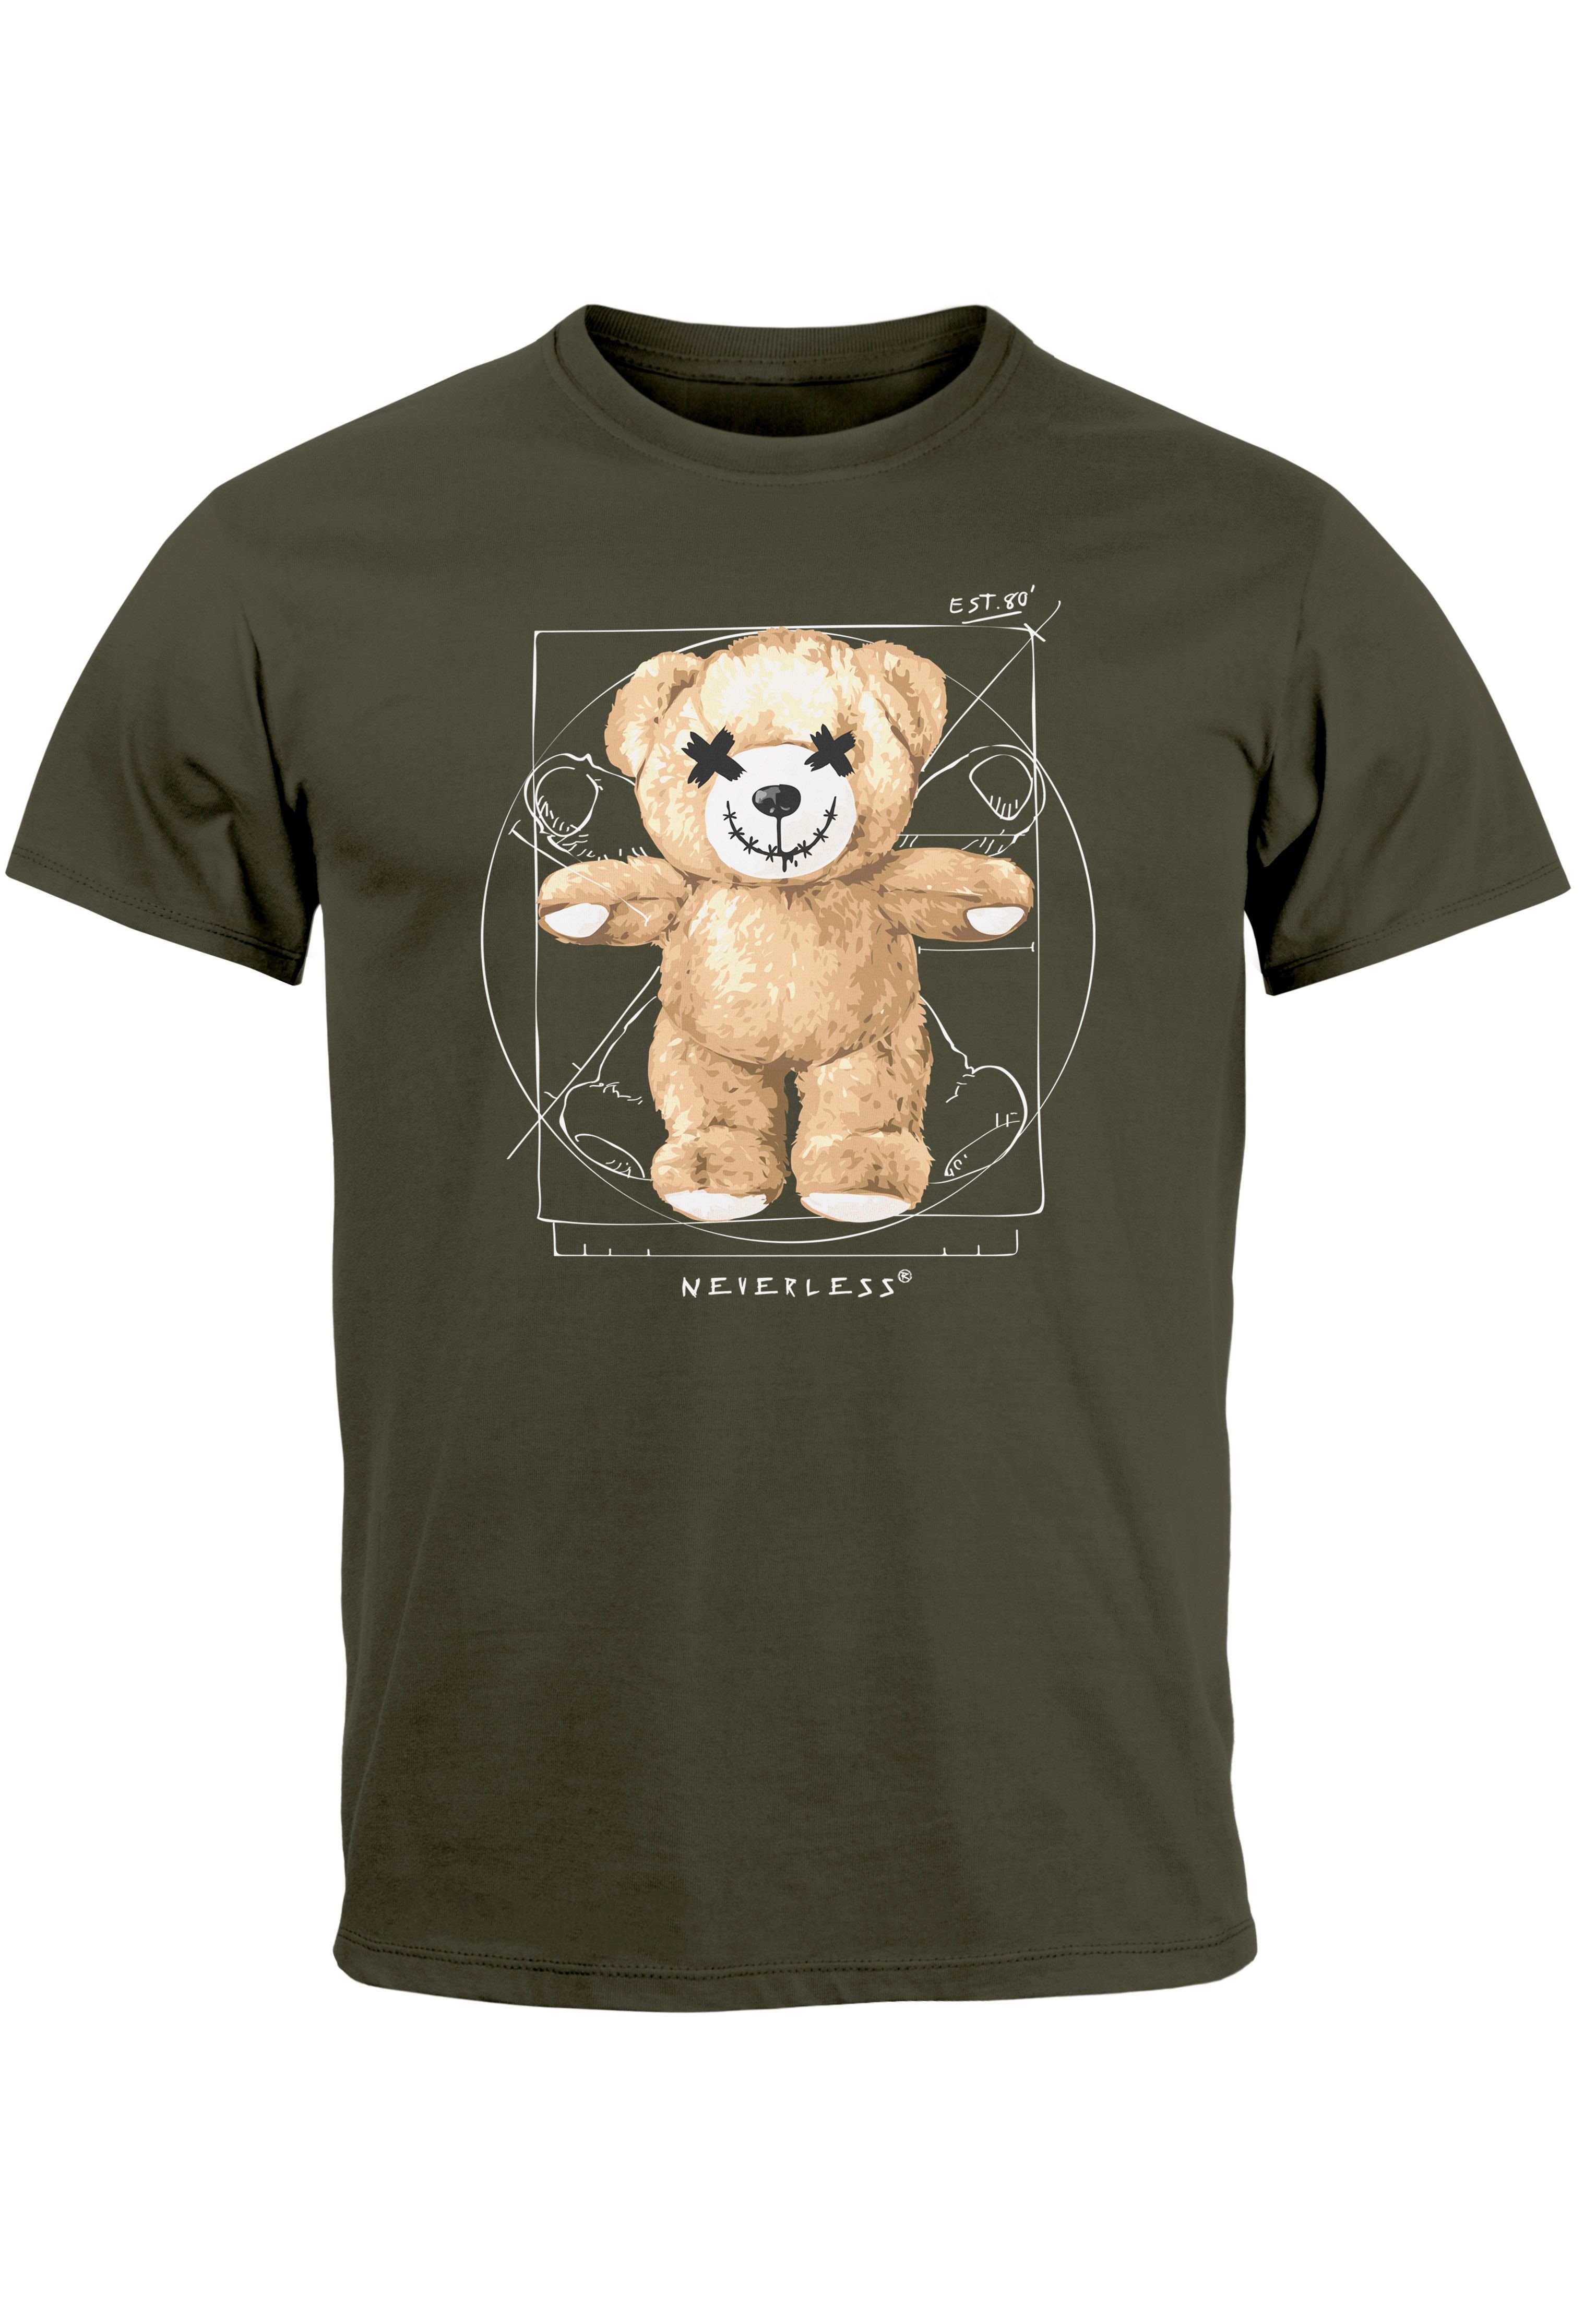 DaVinci Fashion T-Shirt Streetstyl Parodie Herren Meme Teddy army Neverless Print Bär mit Print-Shirt Print